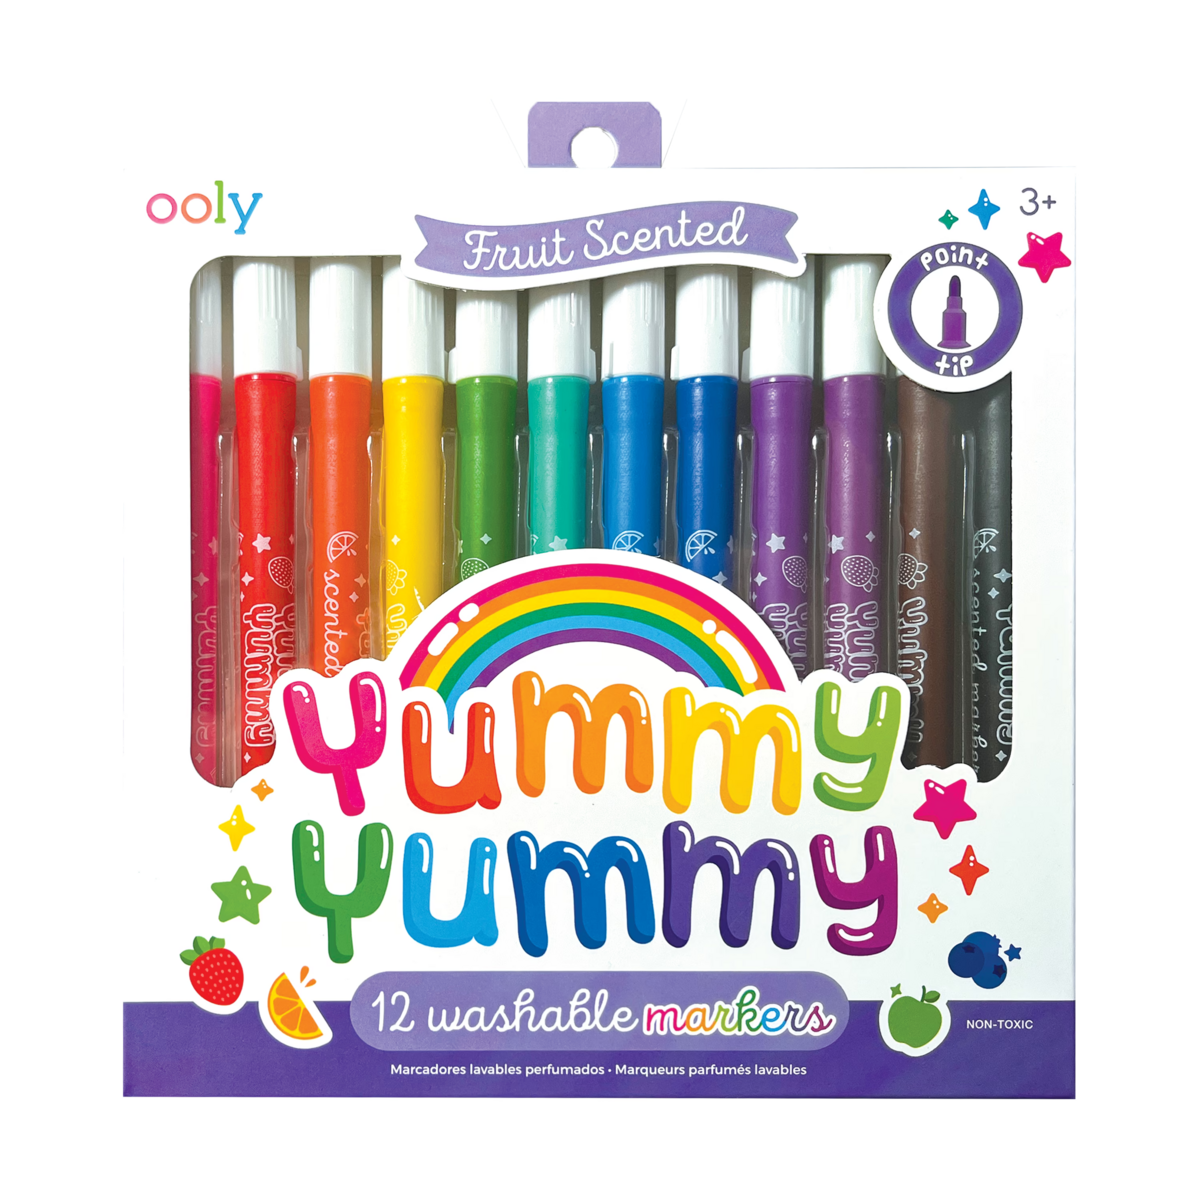 12 Color Glitter Marker Pens for School Office Adult Coloring Book Journal  Drawing Doodling Art Markers Promotion Pen Art Marker